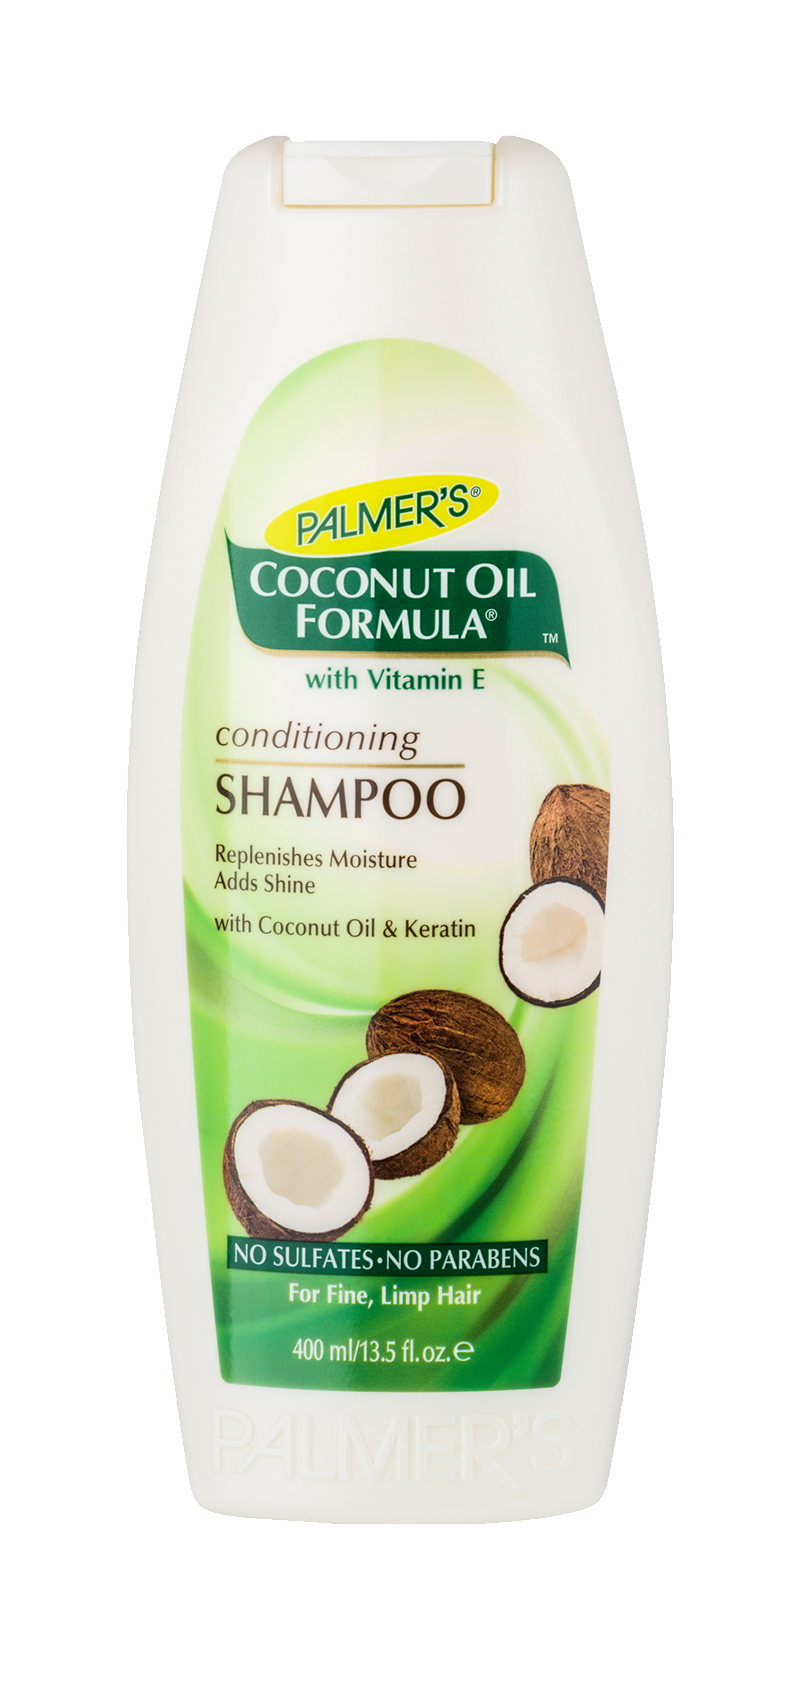 Shampoo PNG image free Download 